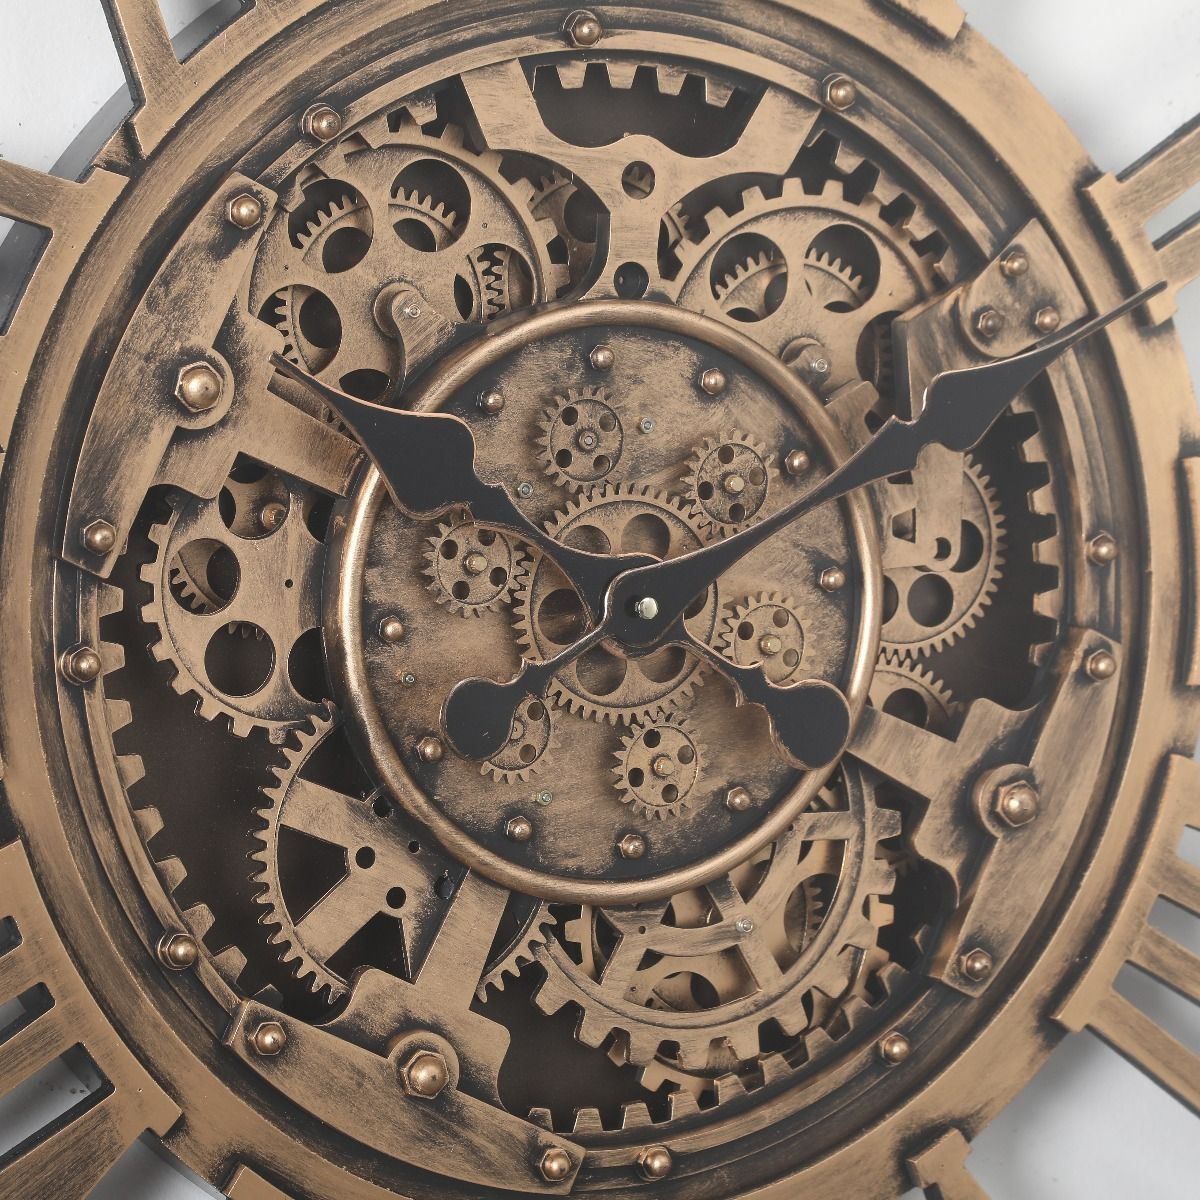 Industrial/vintage-inspired clock range - MODEL 030